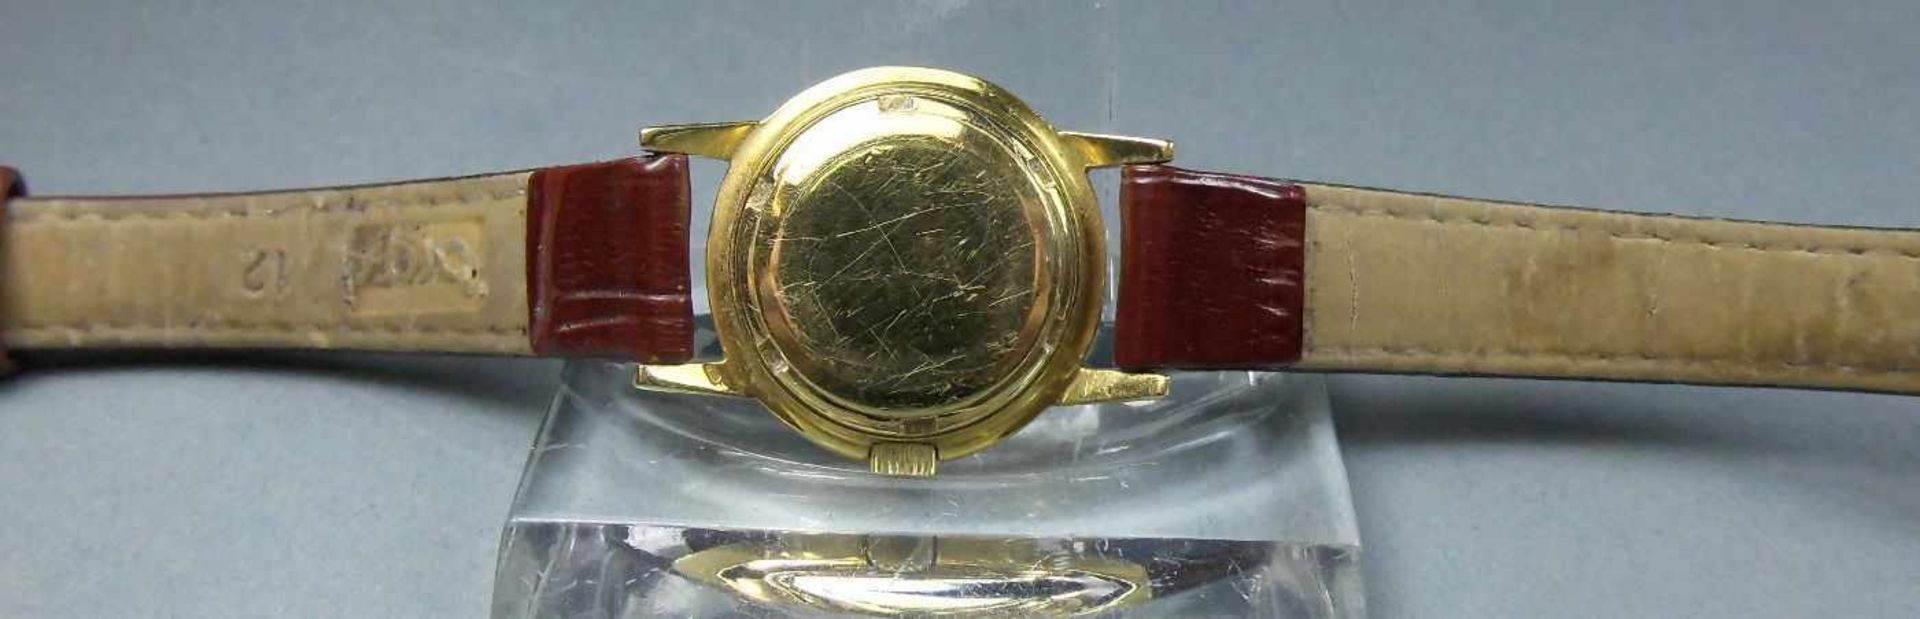 GOLDENE ETERNA - MATIC DAMEN - ARMBANDUHR / wristwatch, Automatik-Uhr, wohl 1960er Jahre, Gehäuse - Image 4 of 5